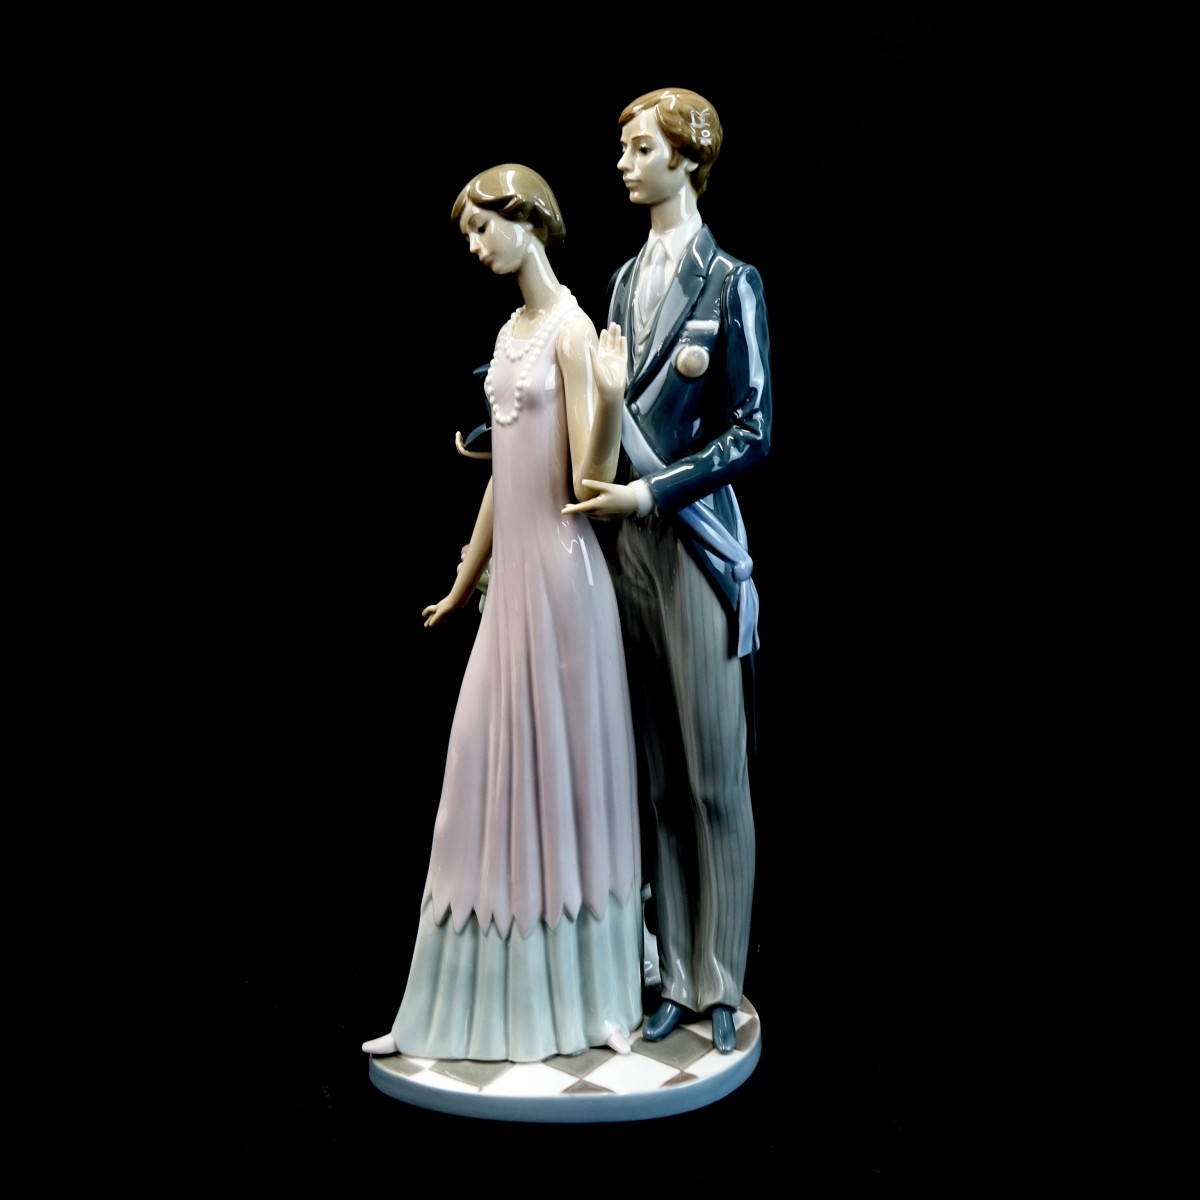 Lladro Porcelain "High Society" Figurine